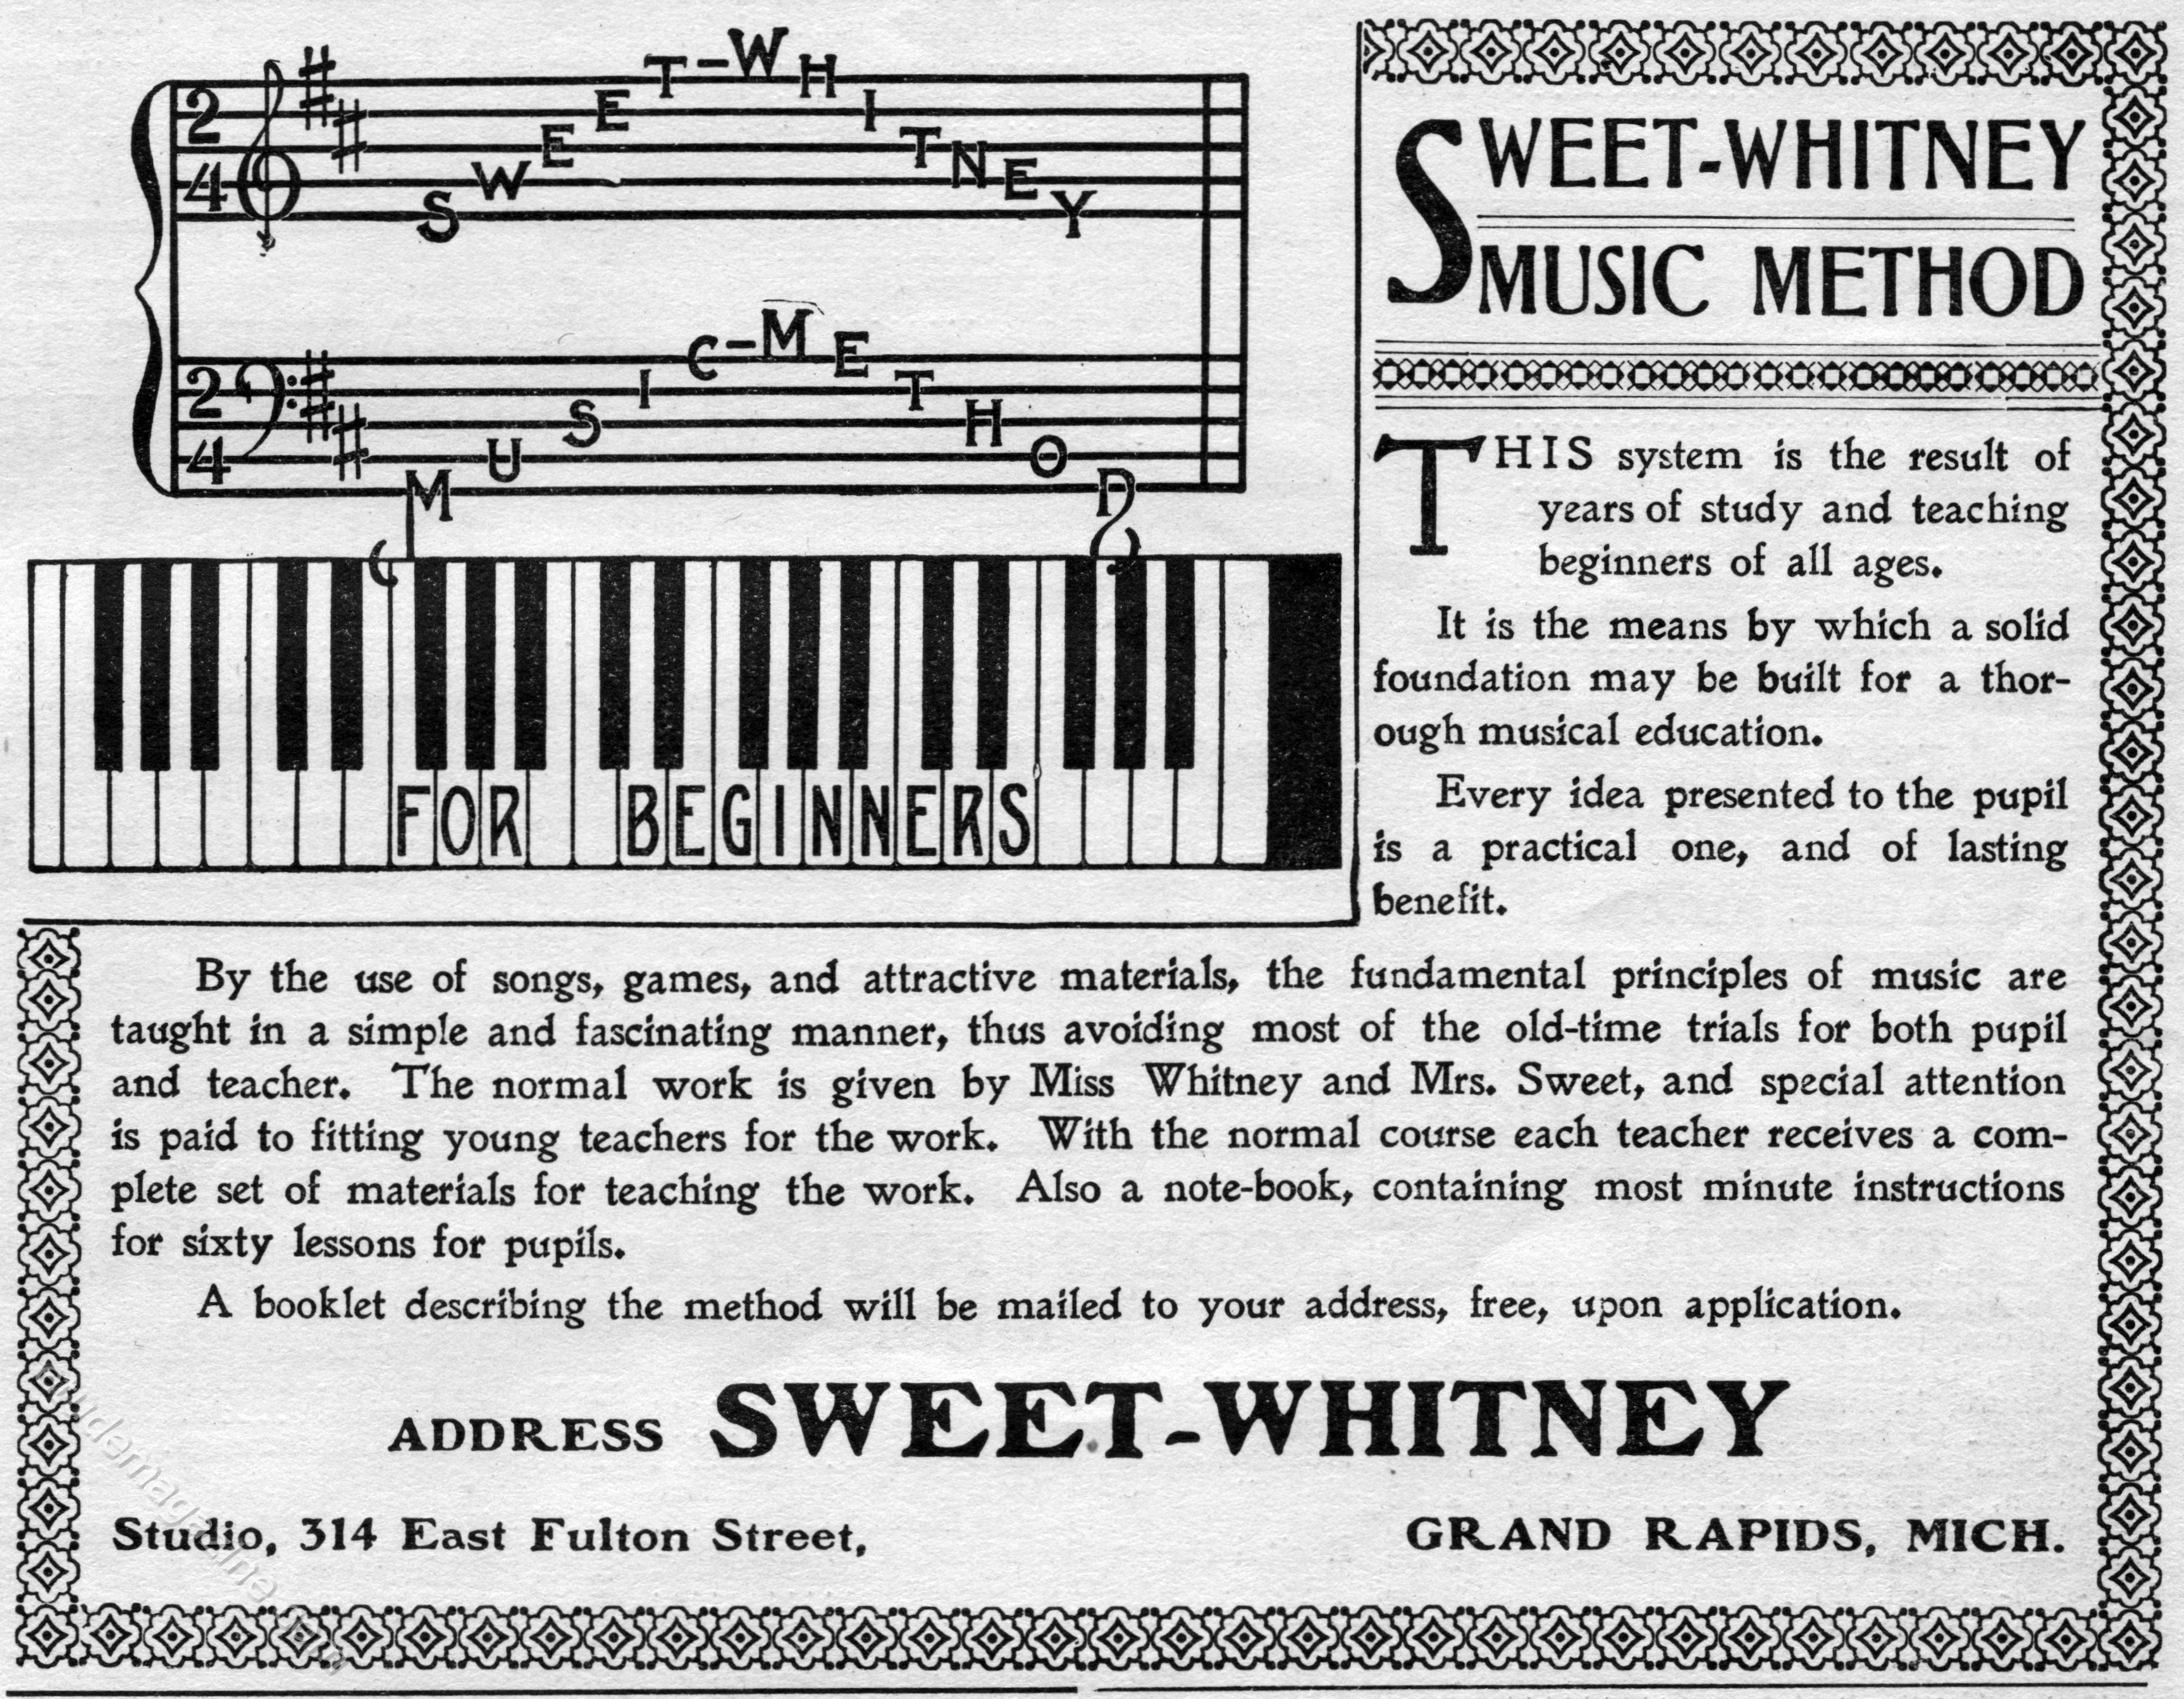 Sweet-Whitney Music Method